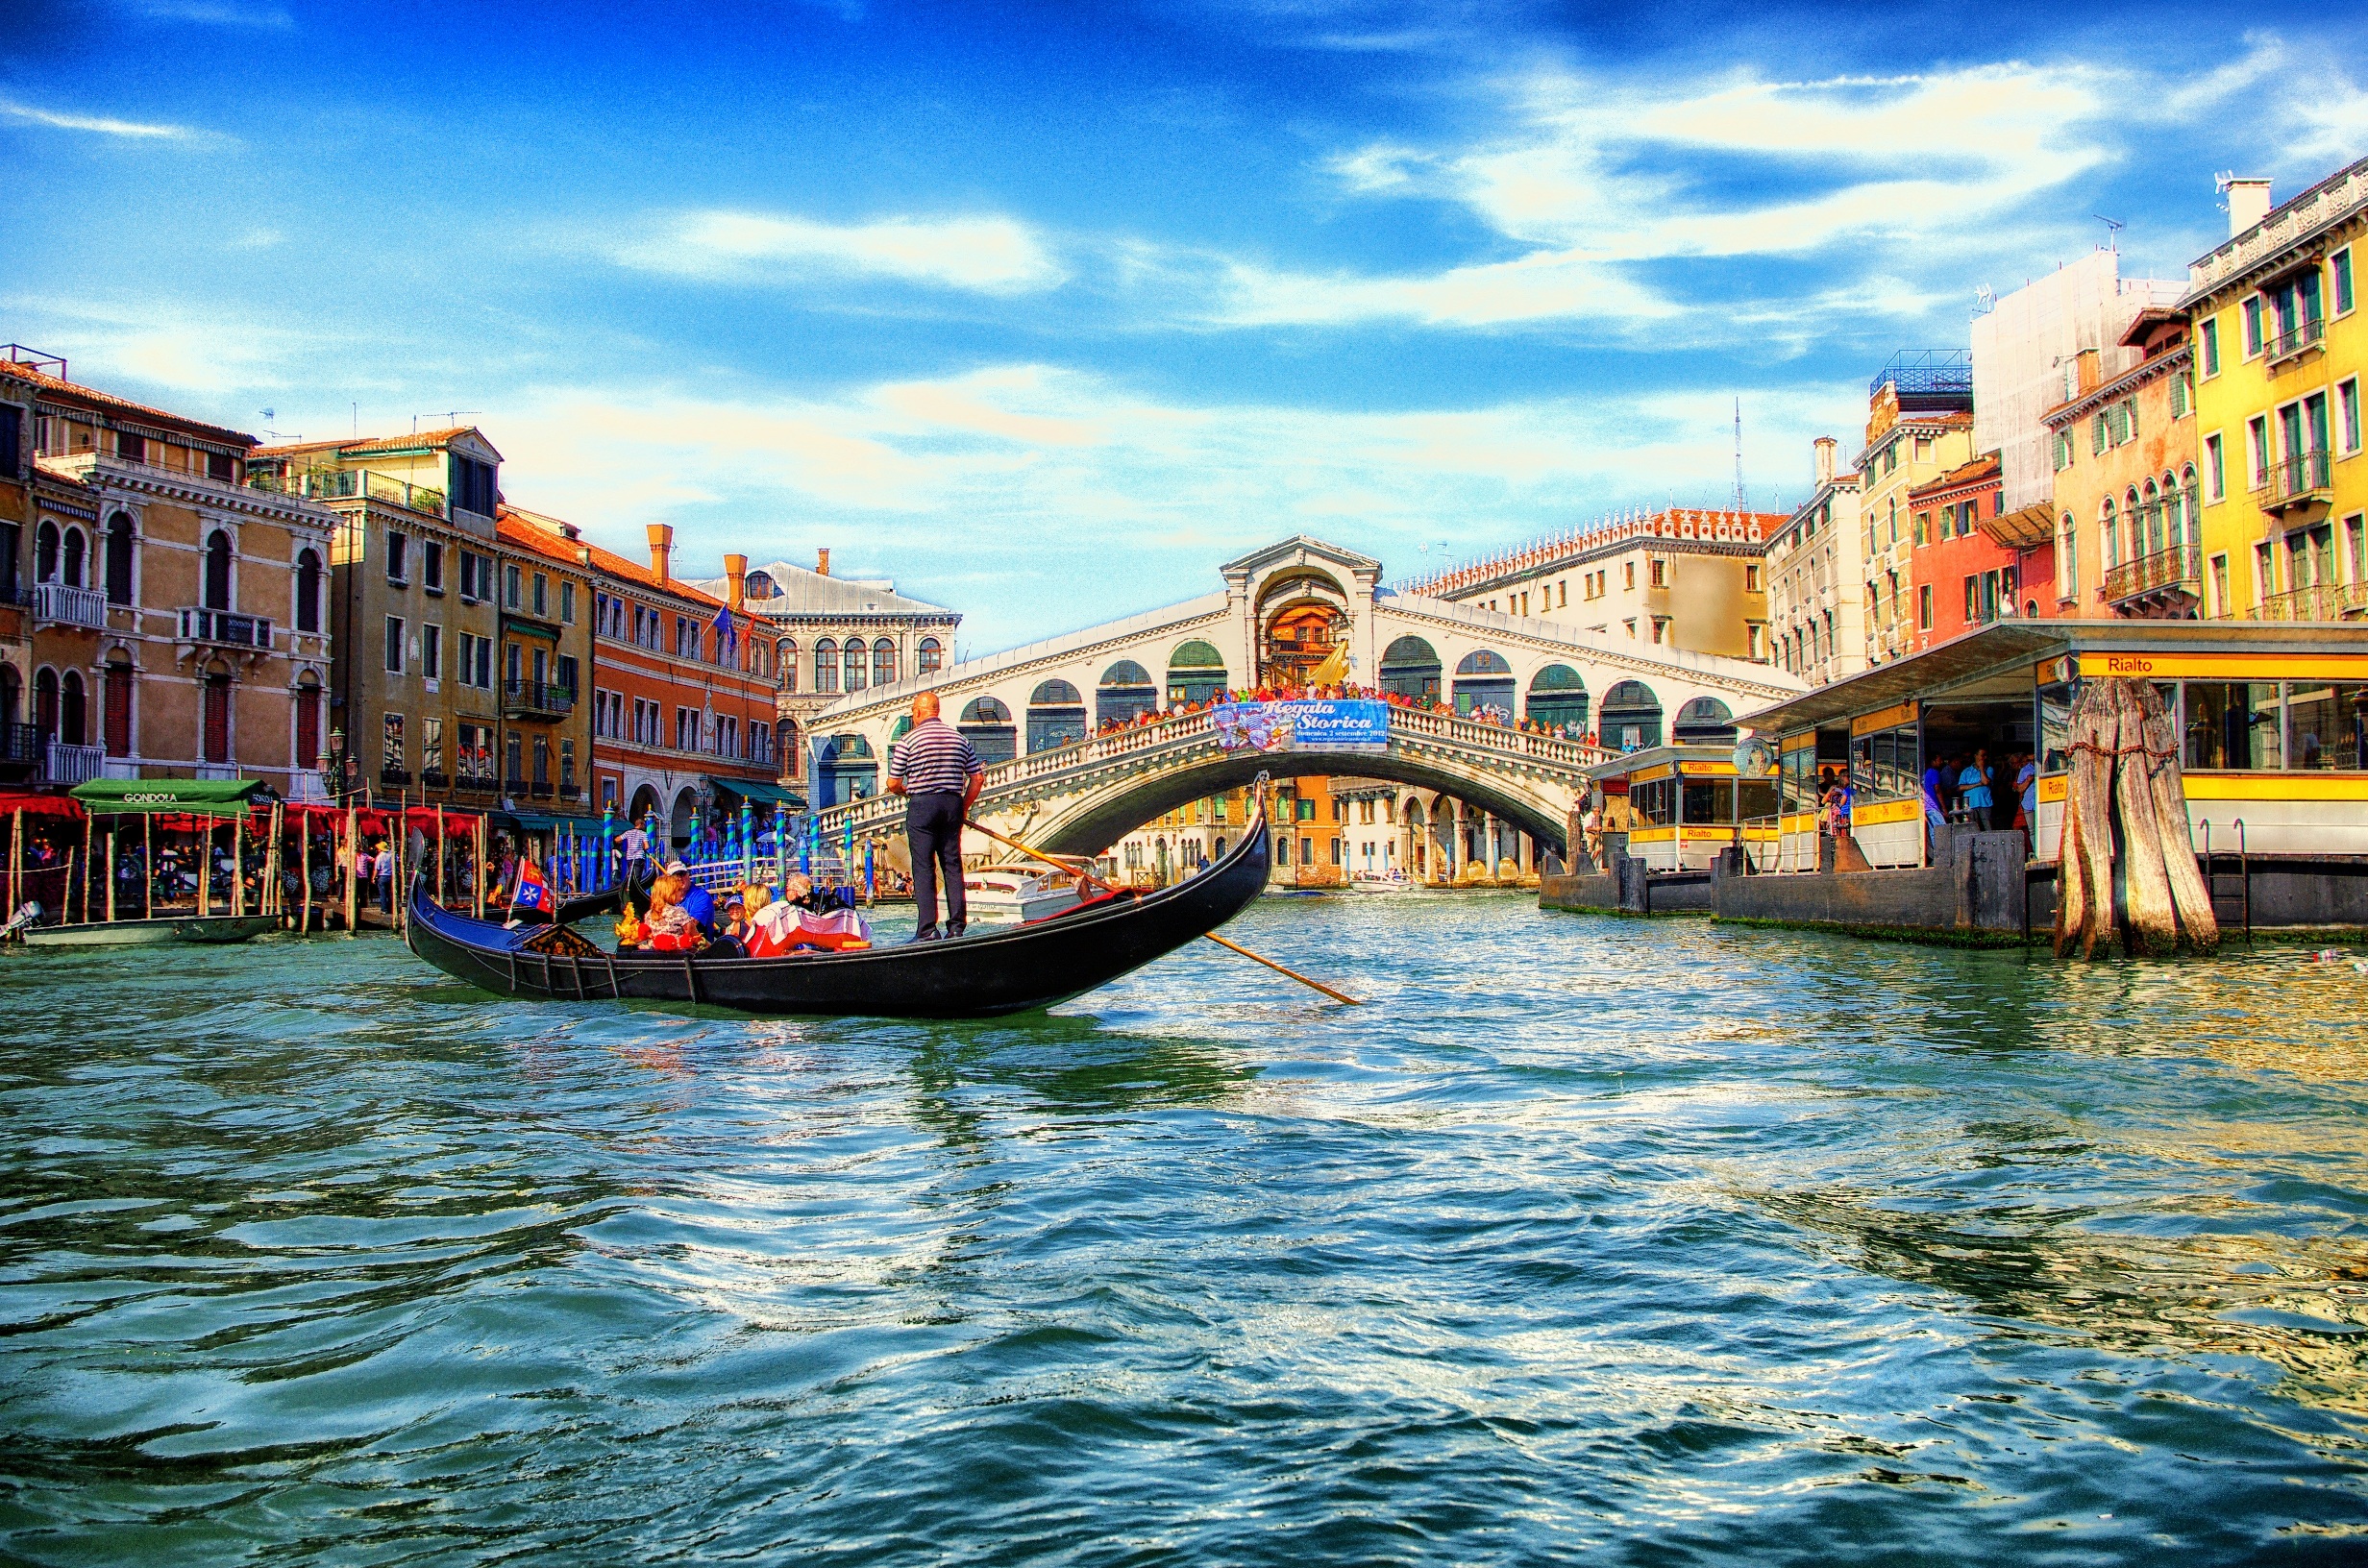 Венеция какое государство. Мост Риальто, Венеция, Италия. Мост Риальто достопримечательности Венеции. Мост Риальто Венеция панорама. Италия Венеция гондолы.